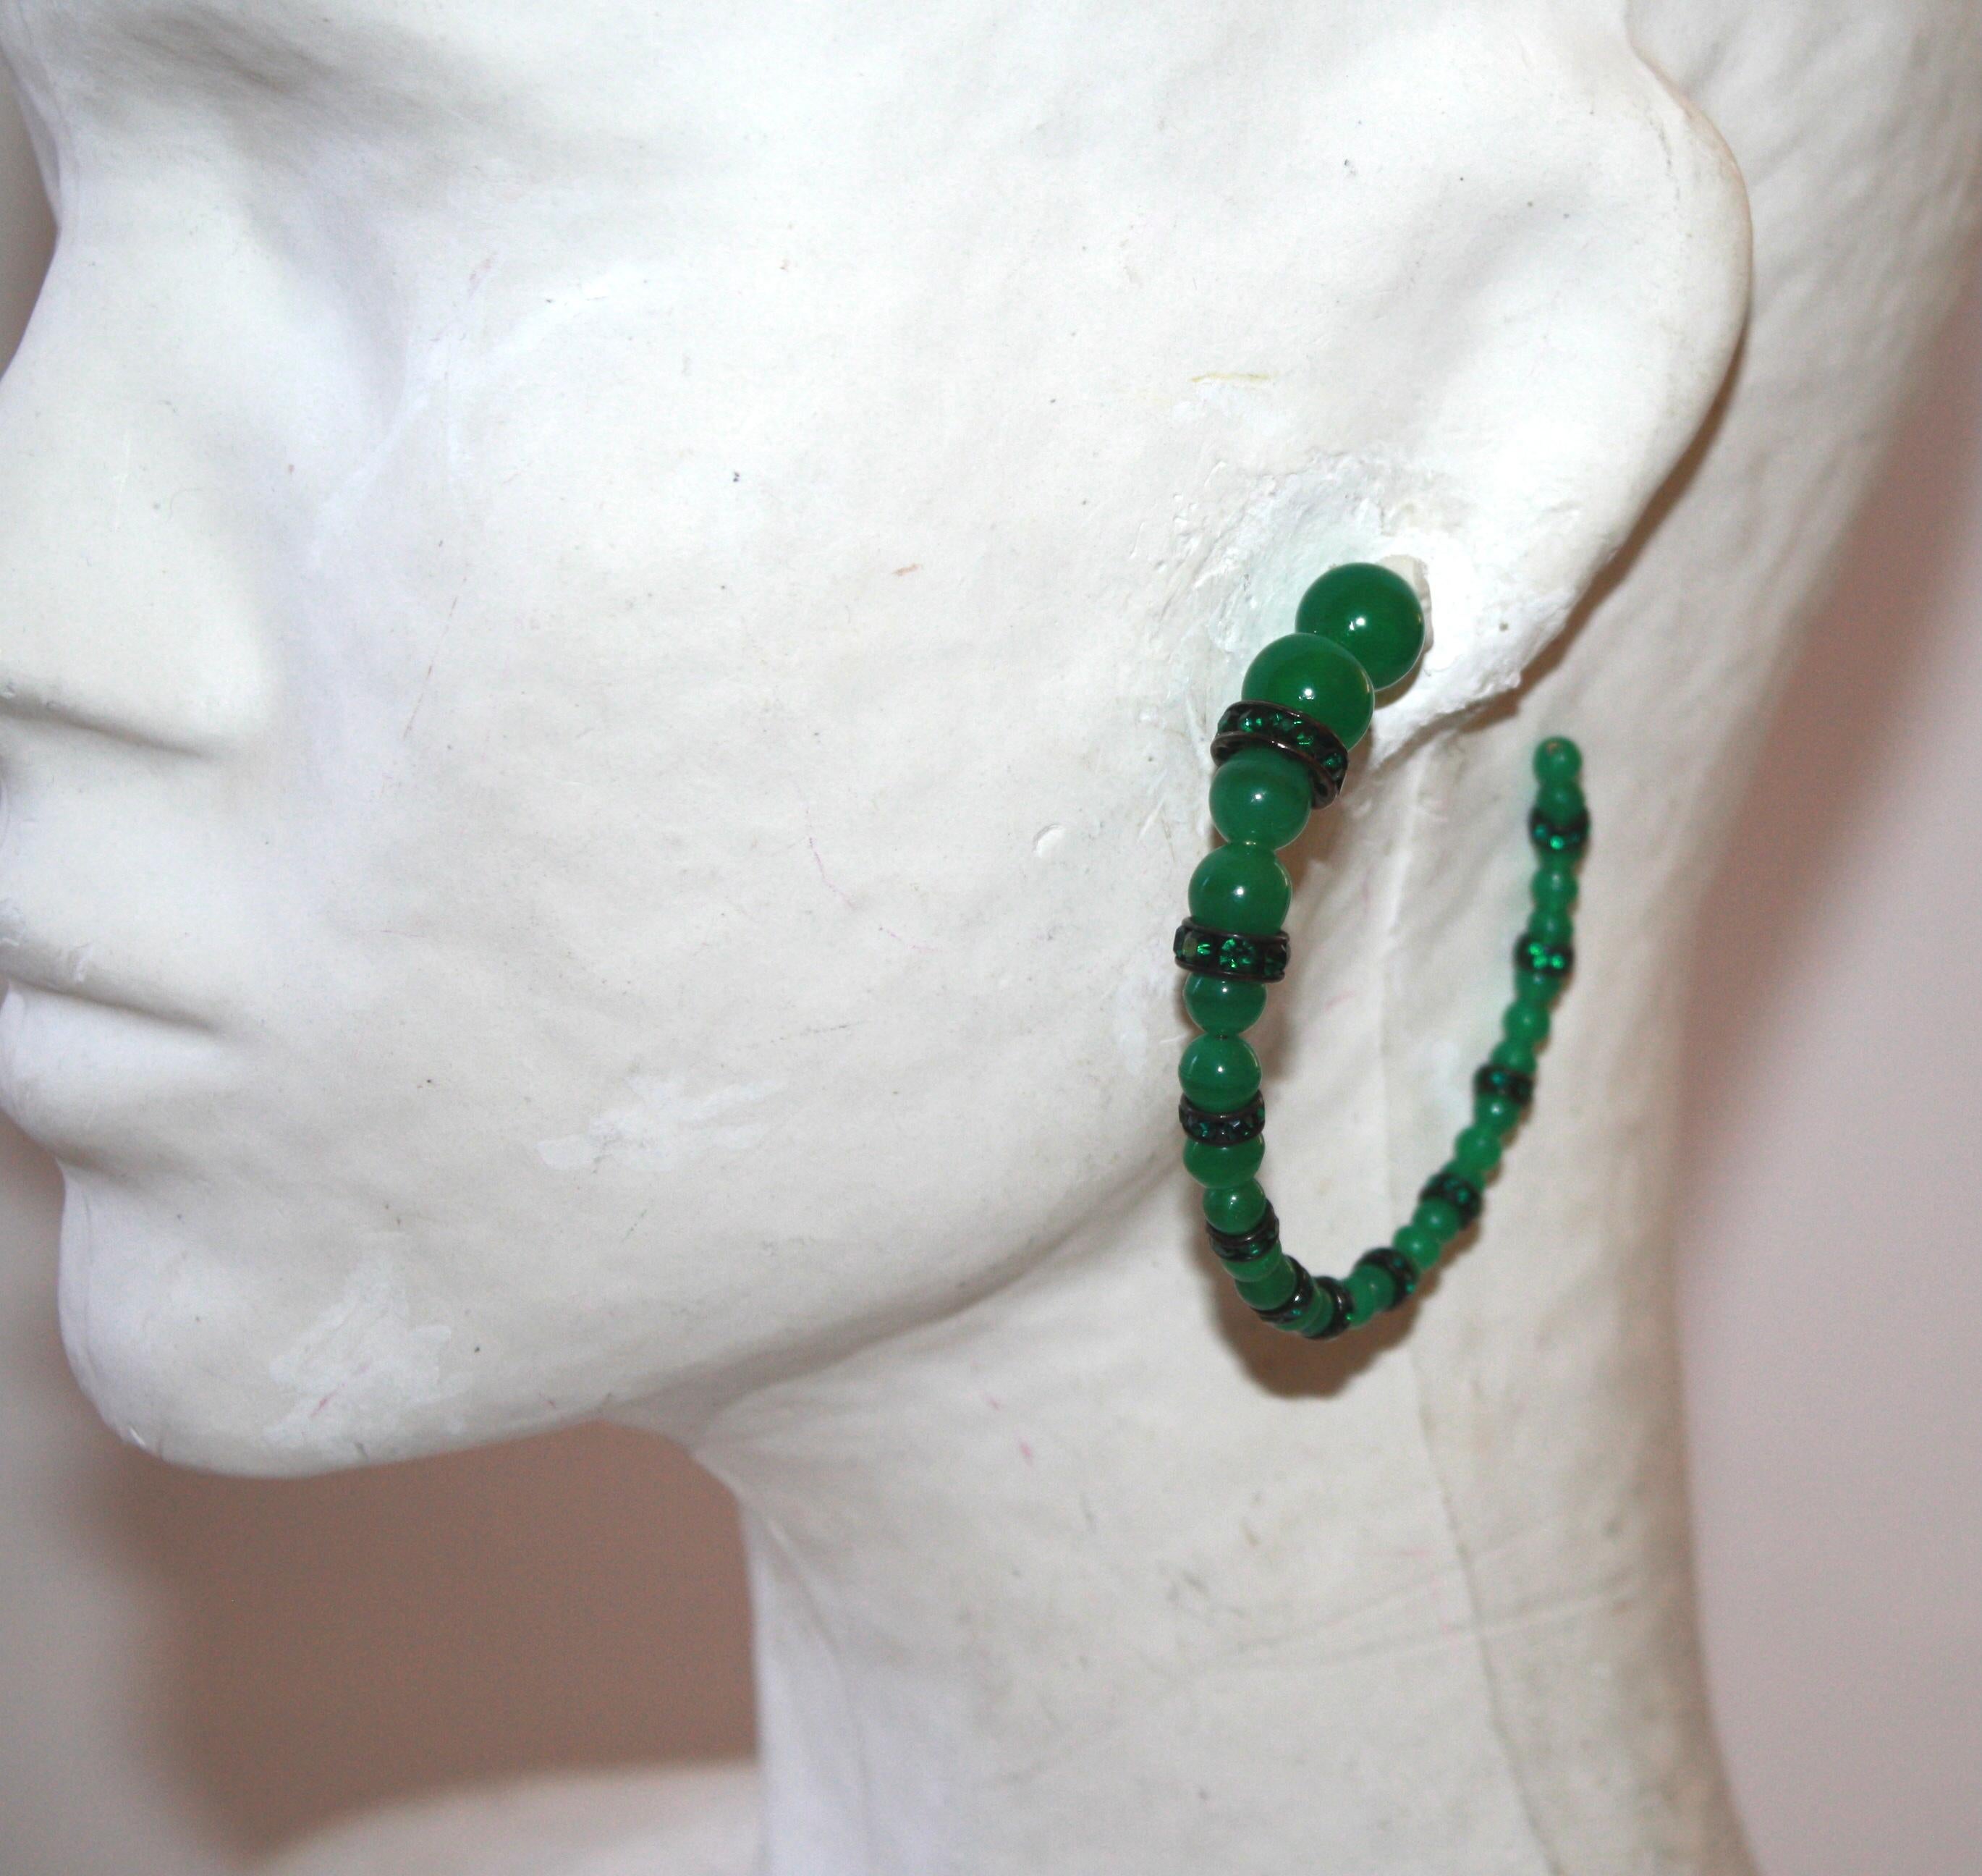 Handmade glass and Swarovski Crystal hoop earrings from Francoise Montague. 